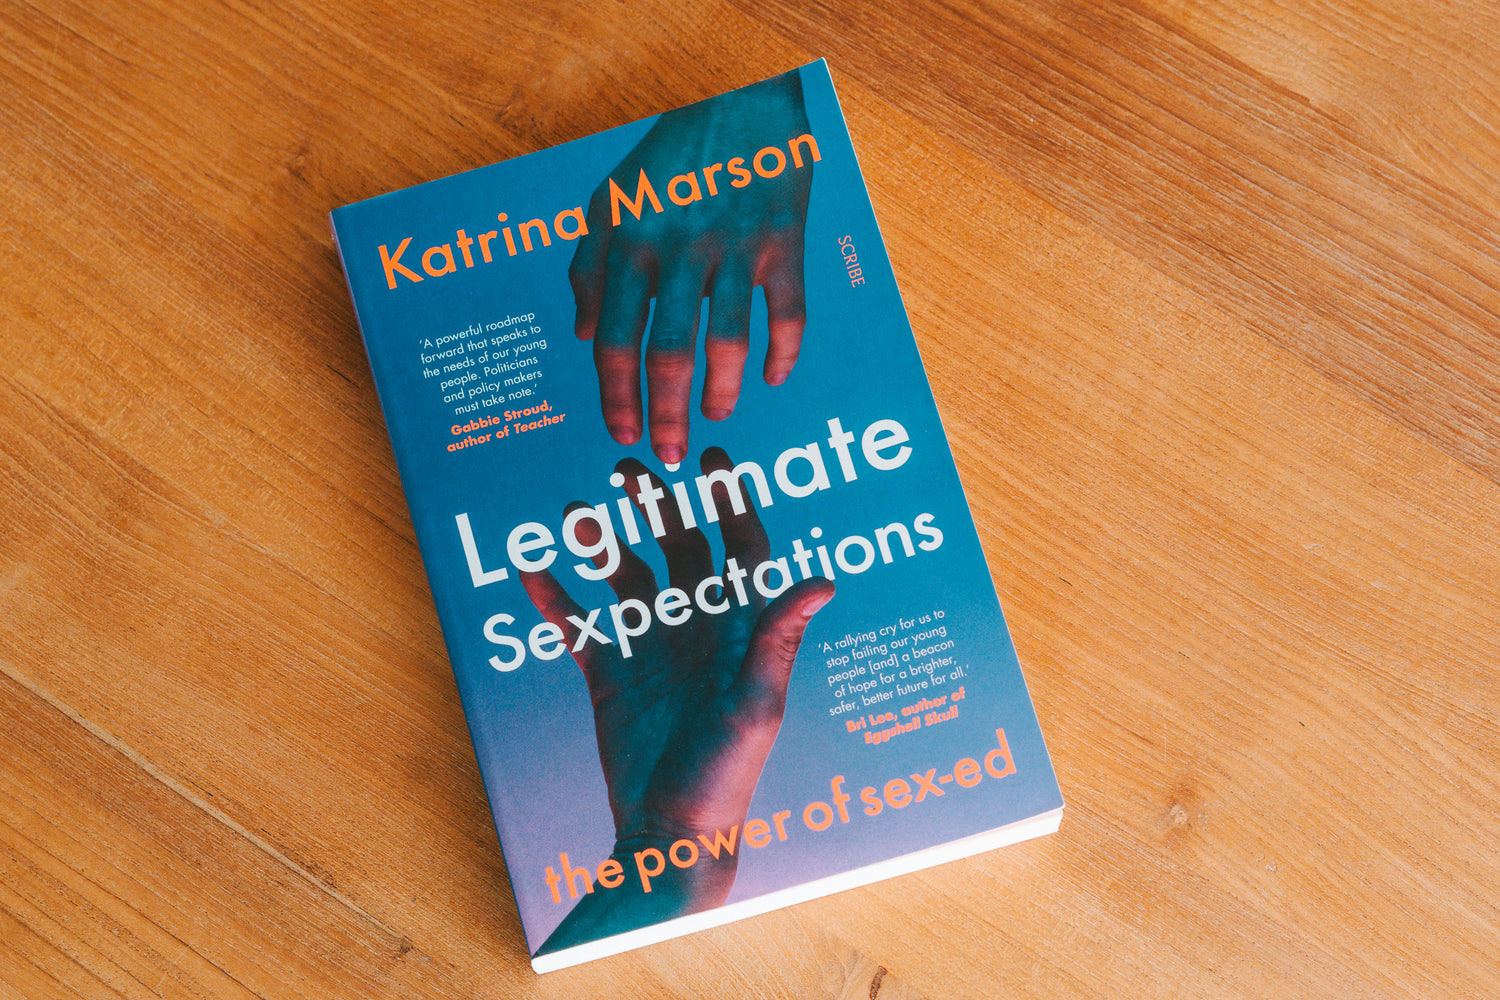 Legitimate Sexpectations by Katrina Marson